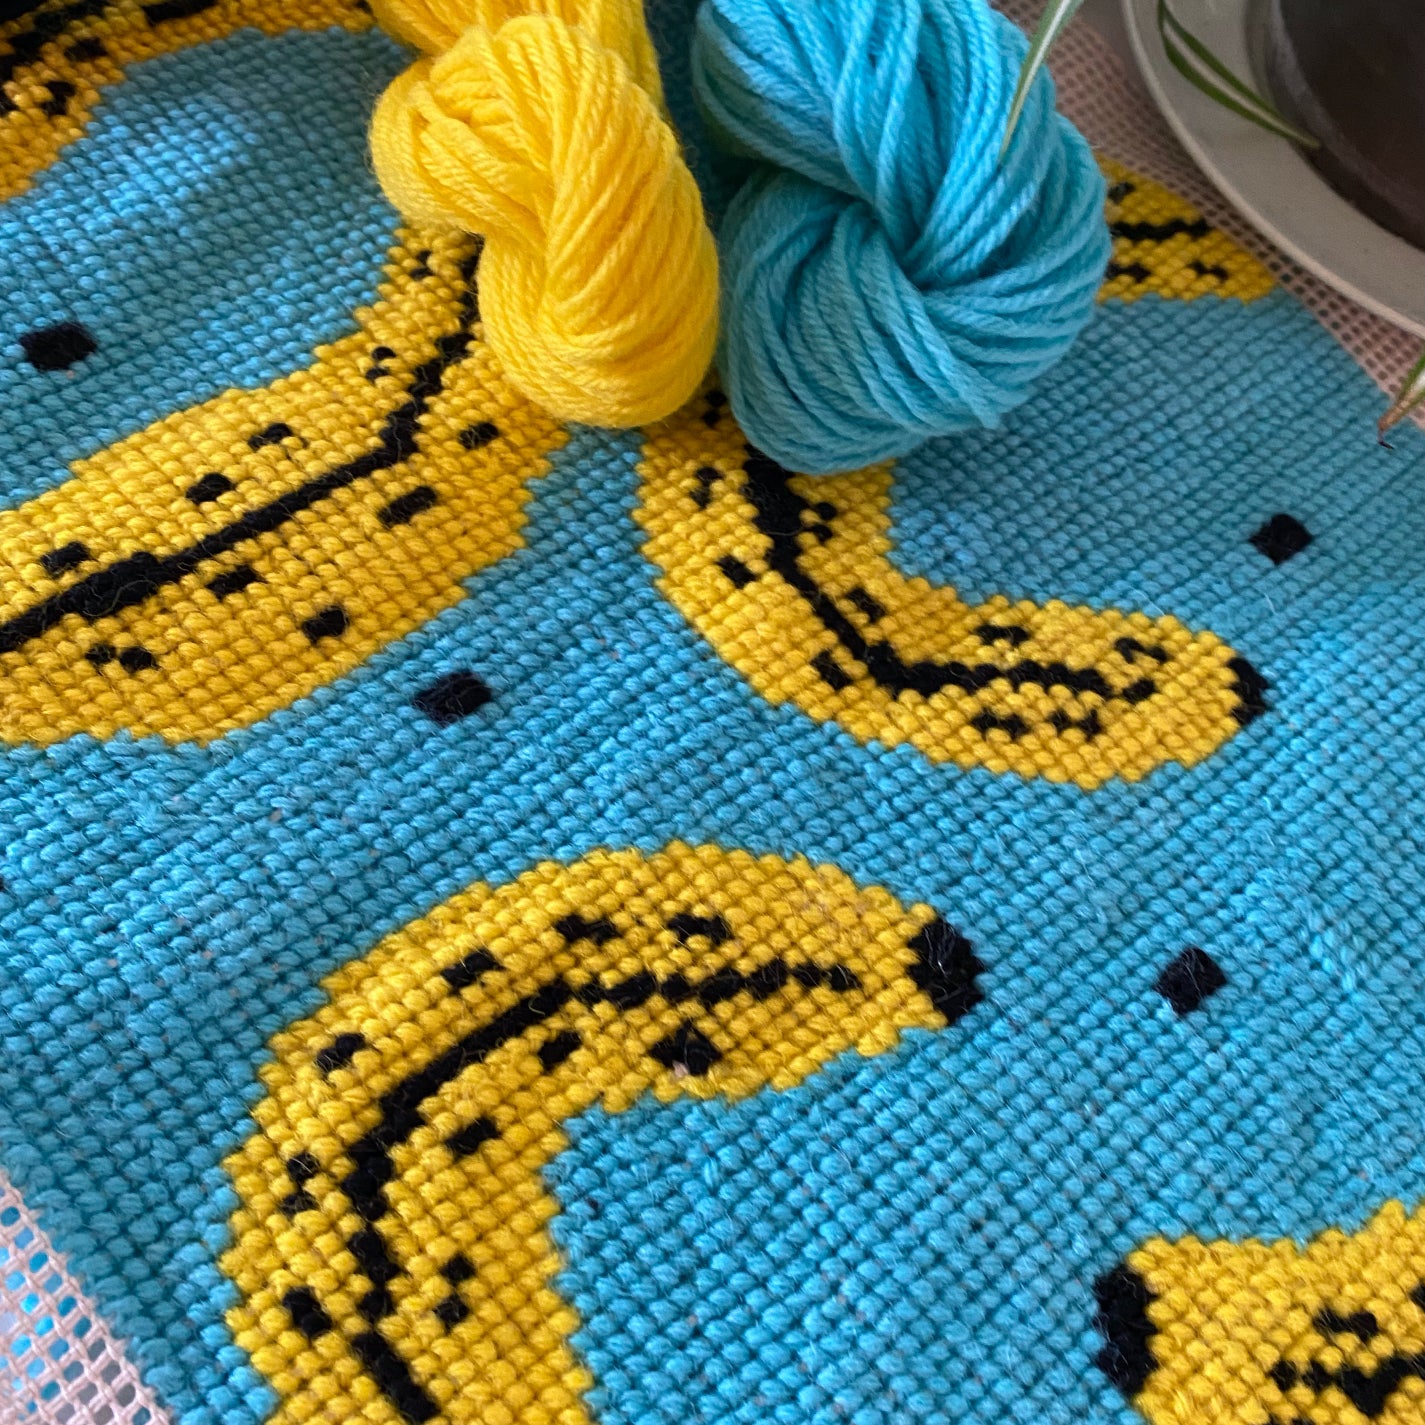 Stitch Kits - Tapestry banana or watermelon cross stitch kits - The Argentum Design Co